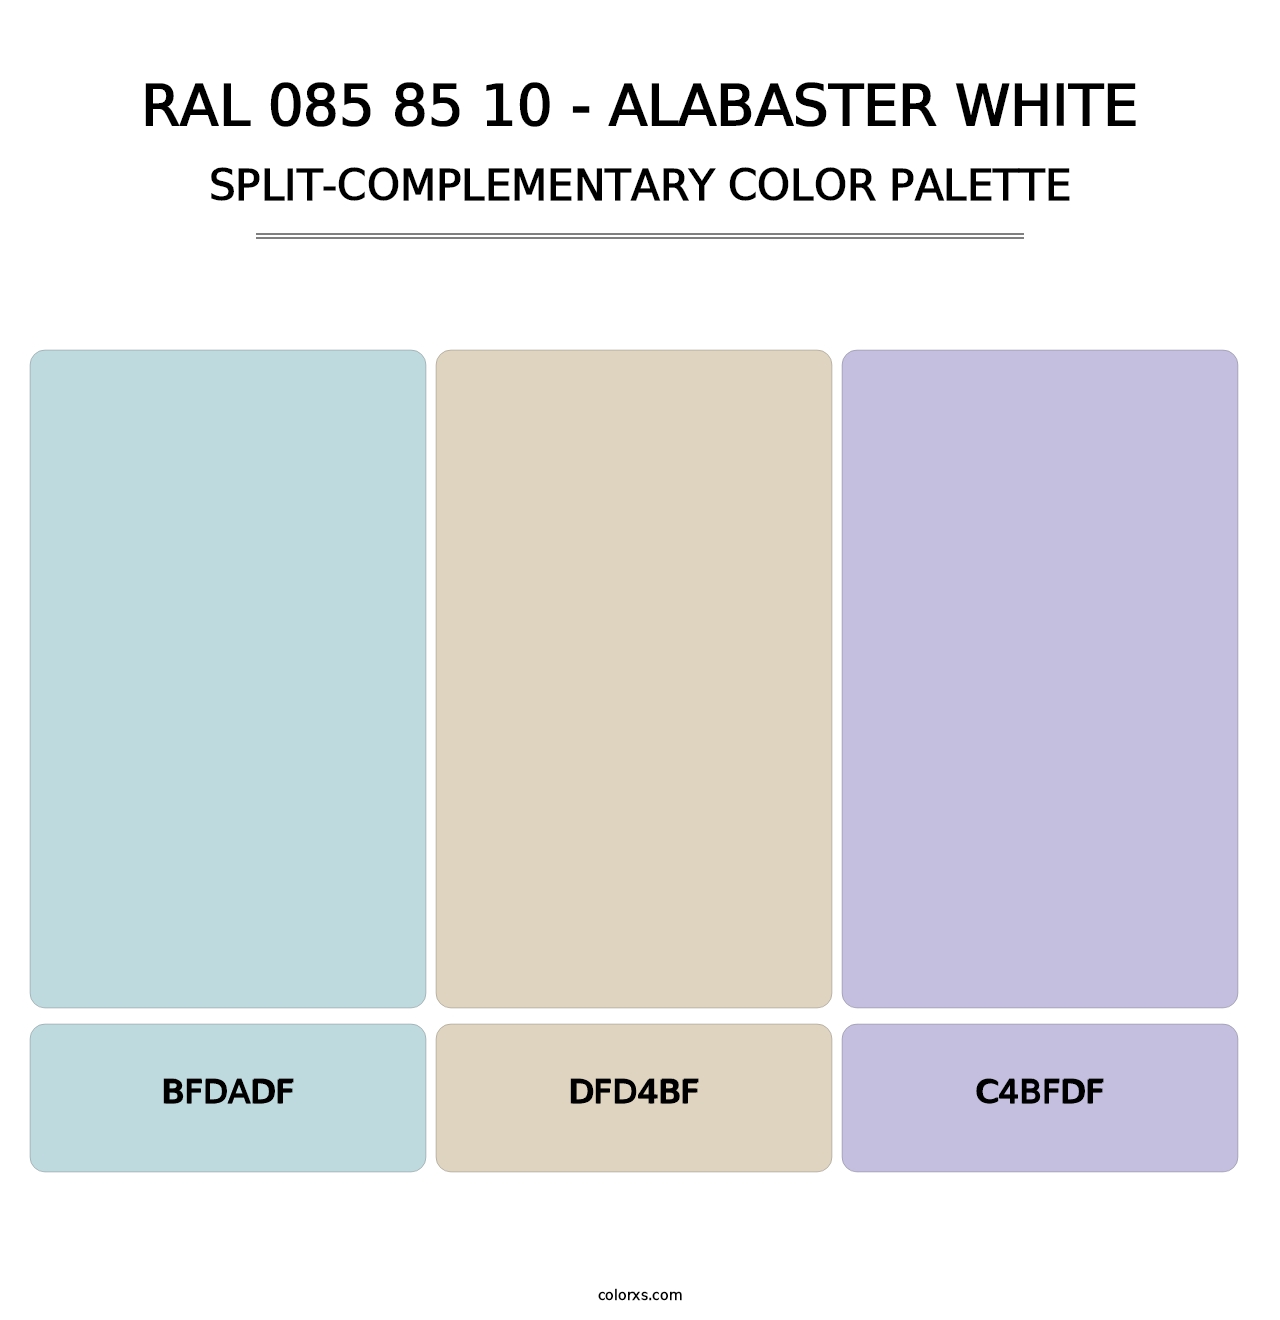 RAL 085 85 10 - Alabaster White - Split-Complementary Color Palette